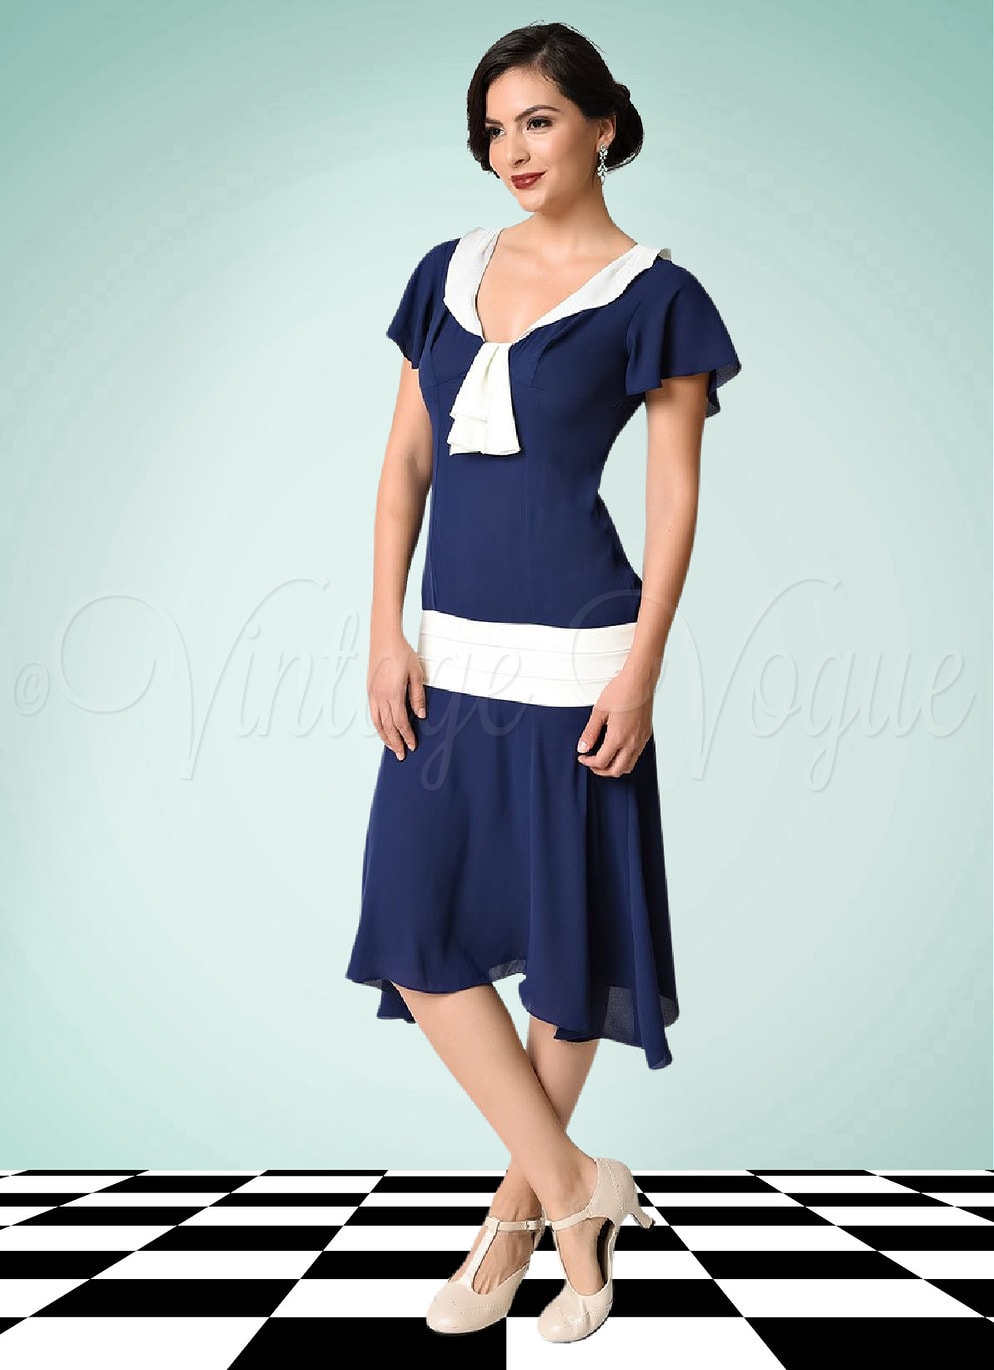 Unique Vintage 20er Jahre Vintage Flapper Charleston Kleid Wilshire Dress in Navy Blau